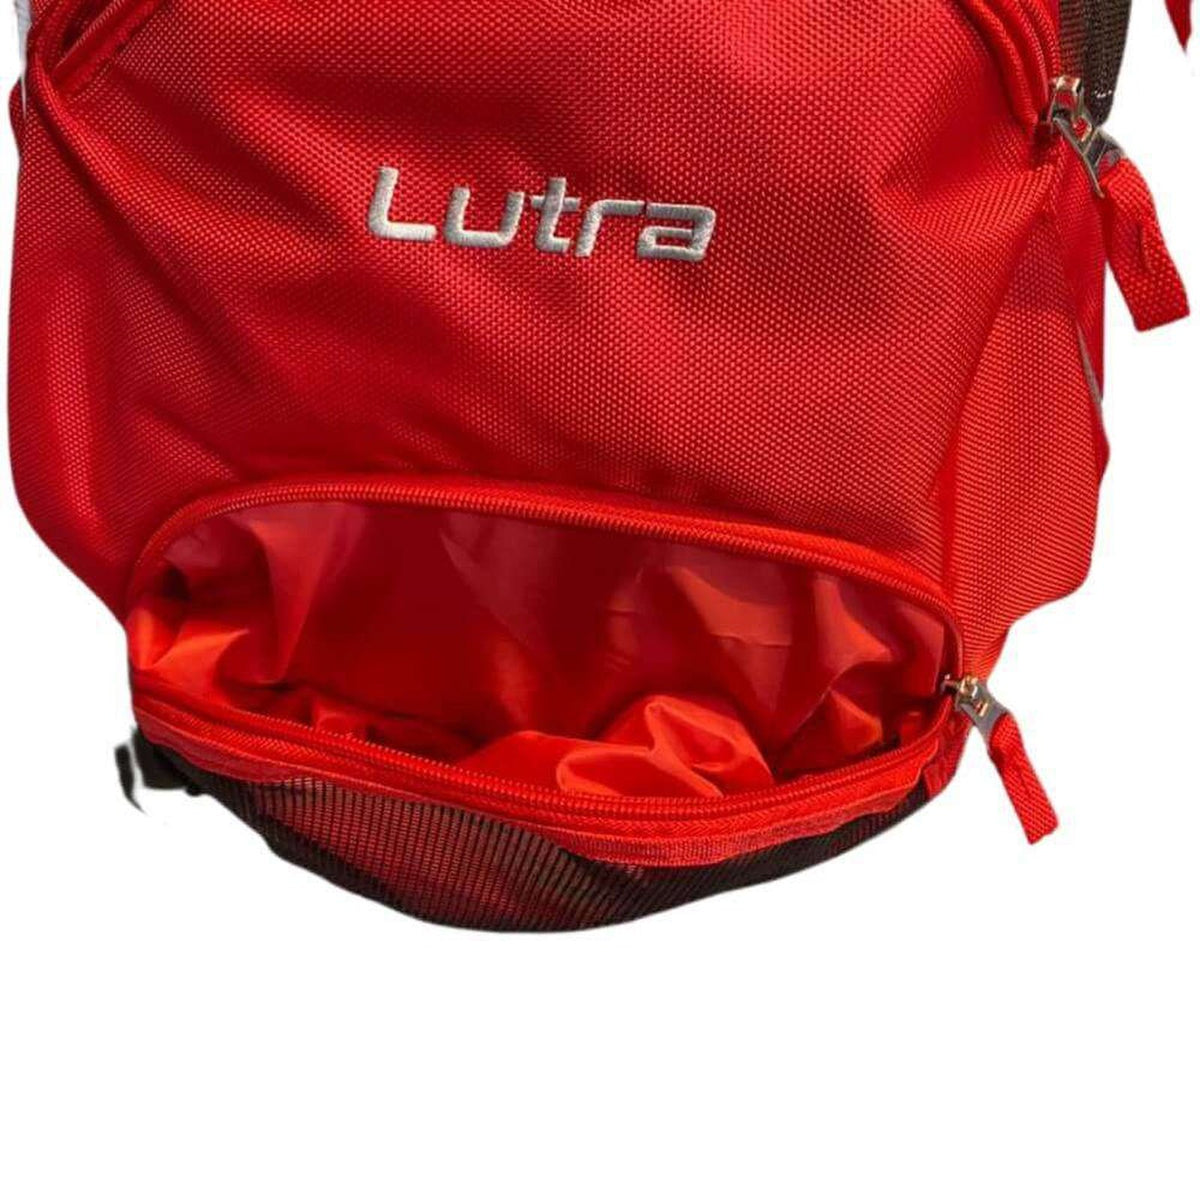 Monifieth SC - Lutra Premium Team Backpack 45 litre - Red